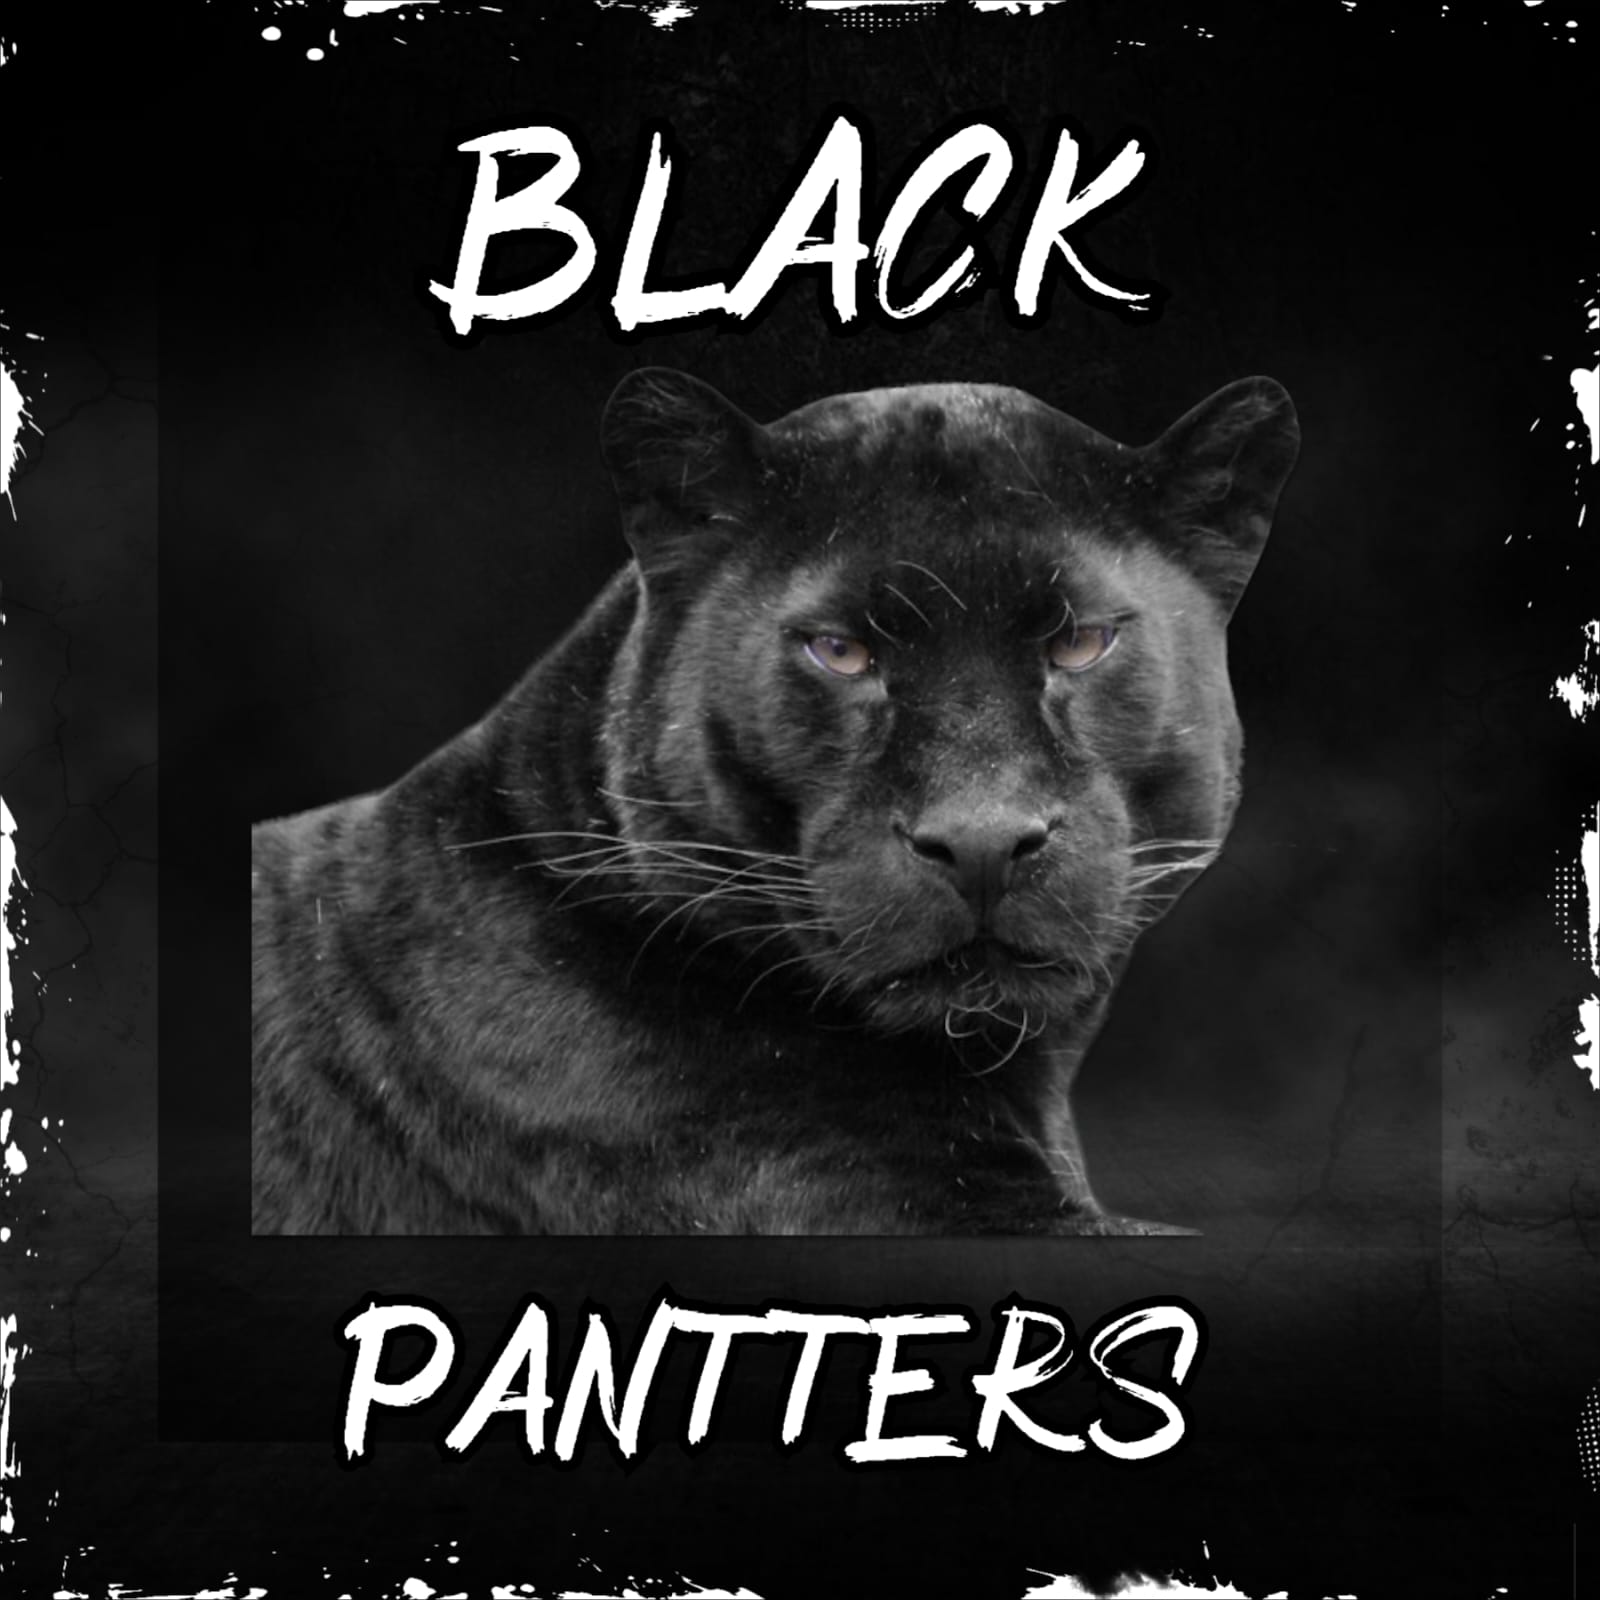 Black pantters